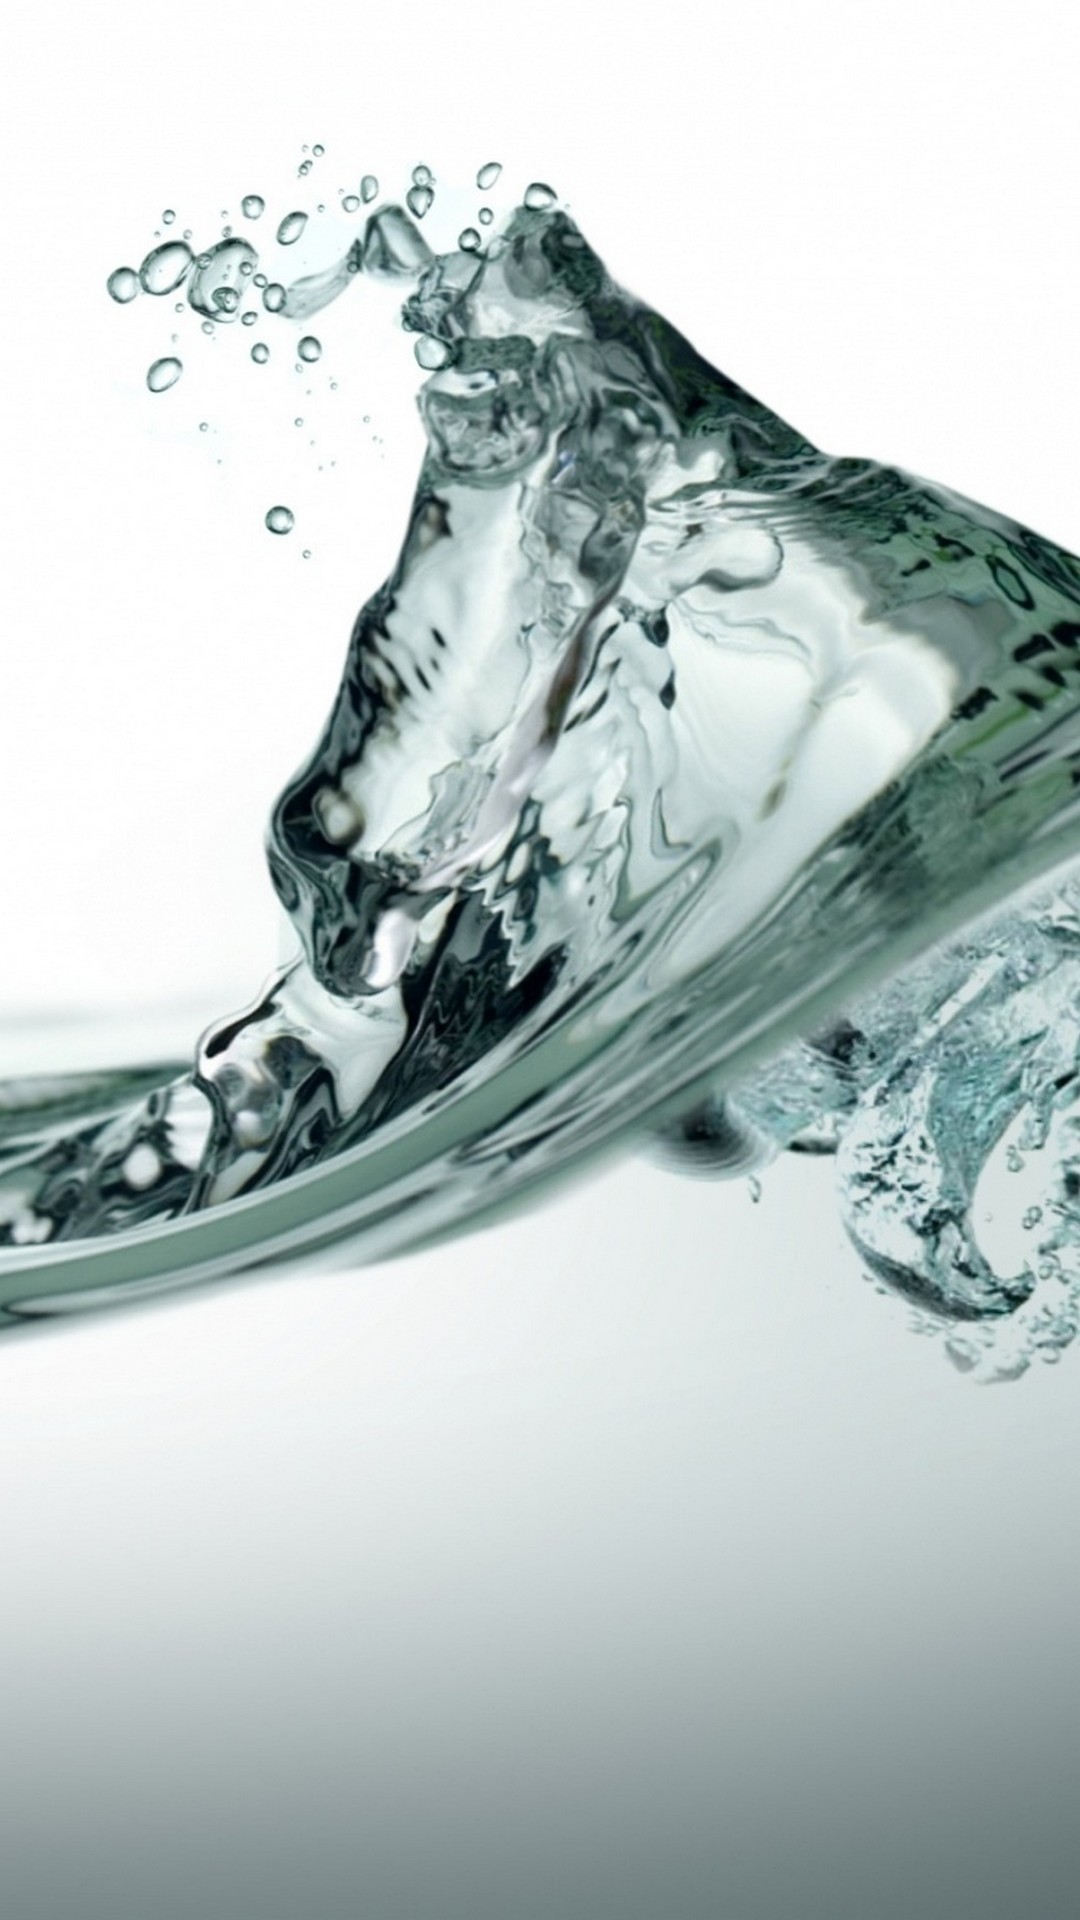 Splash Water Liquid Android Wallpaper resolution 1080x1920